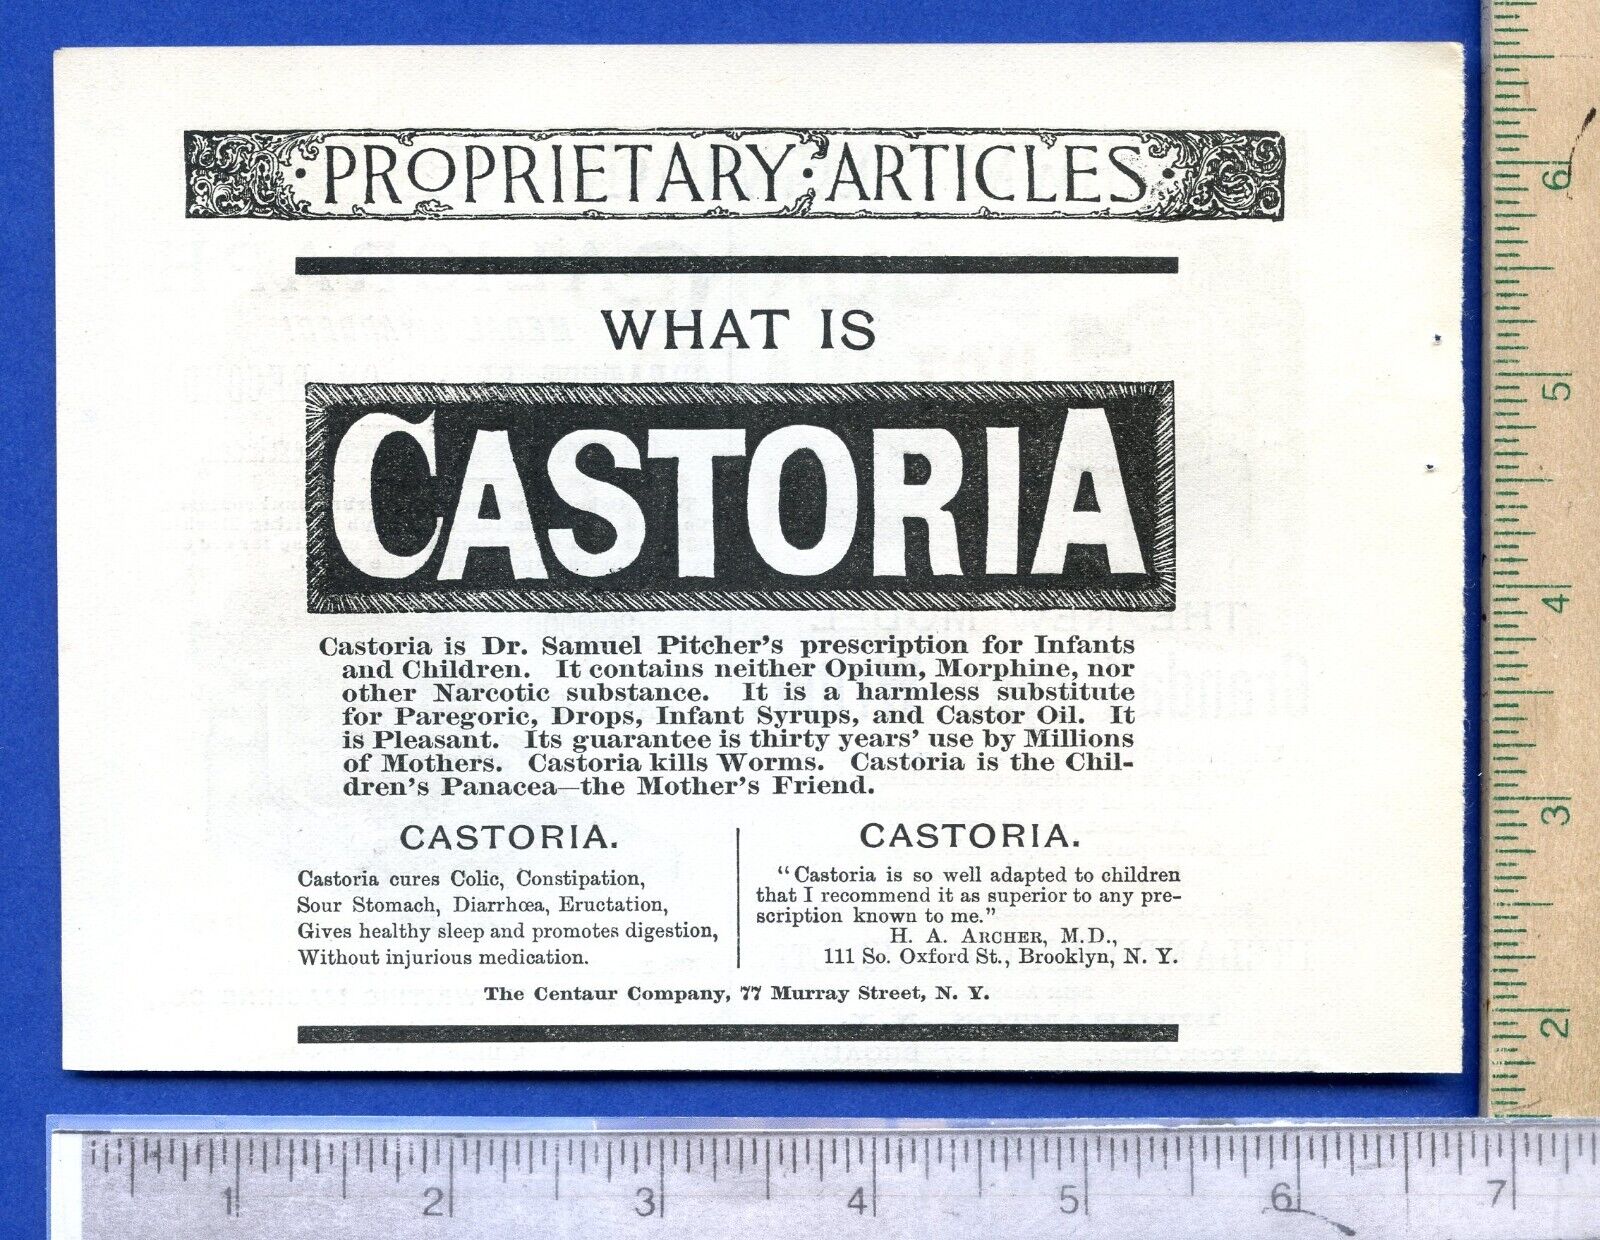 Original antique 1889 Castoria print ad with text in poem poetry verse format